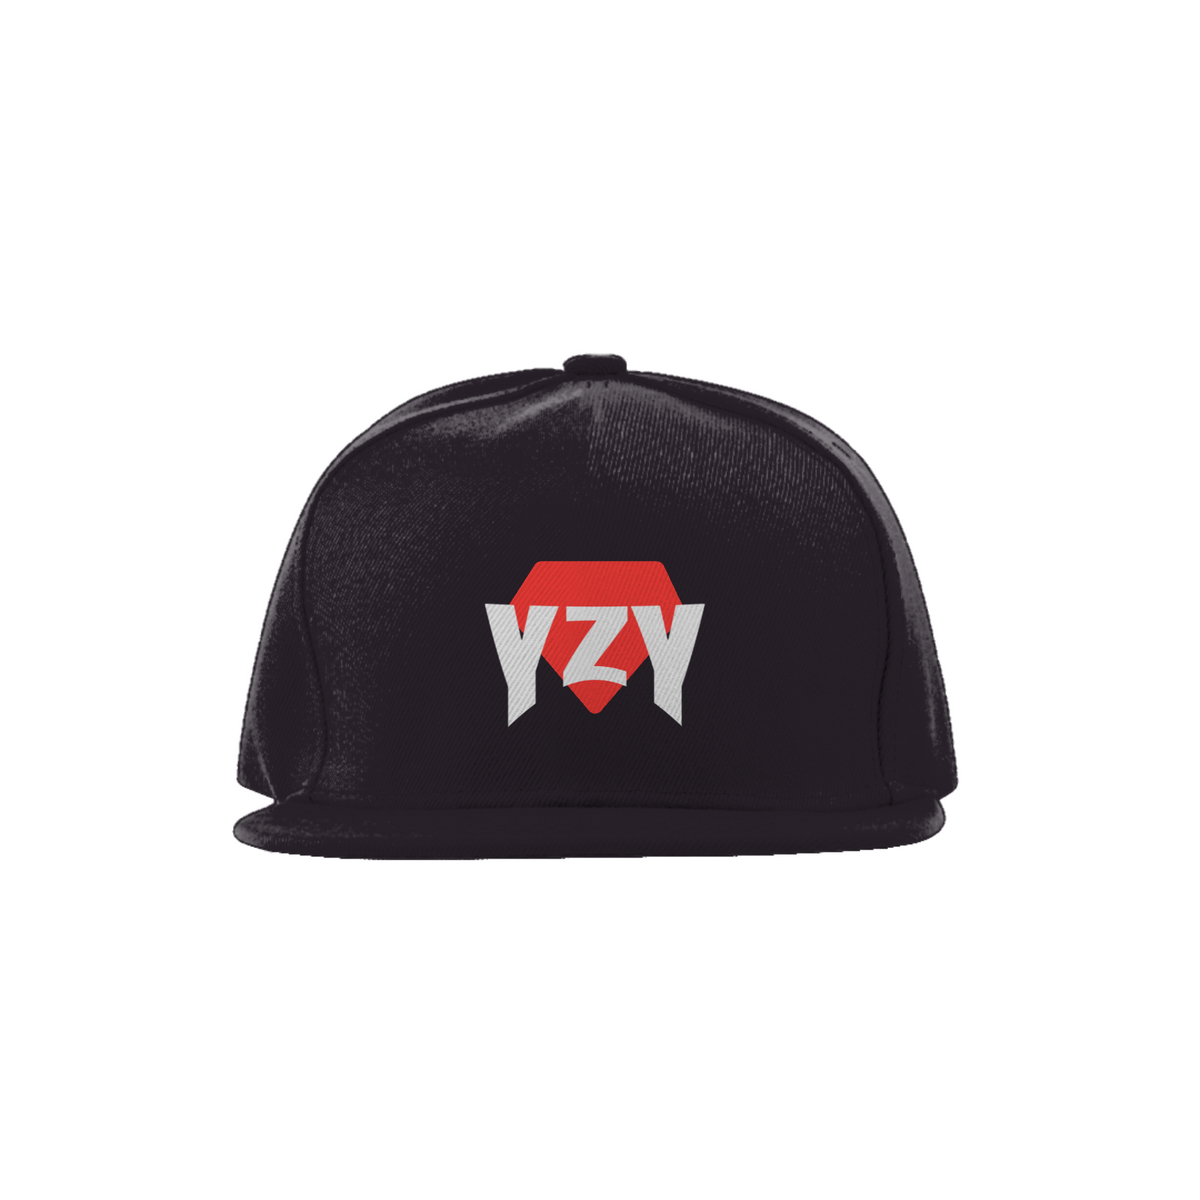 Nome do produto: YZY Cap